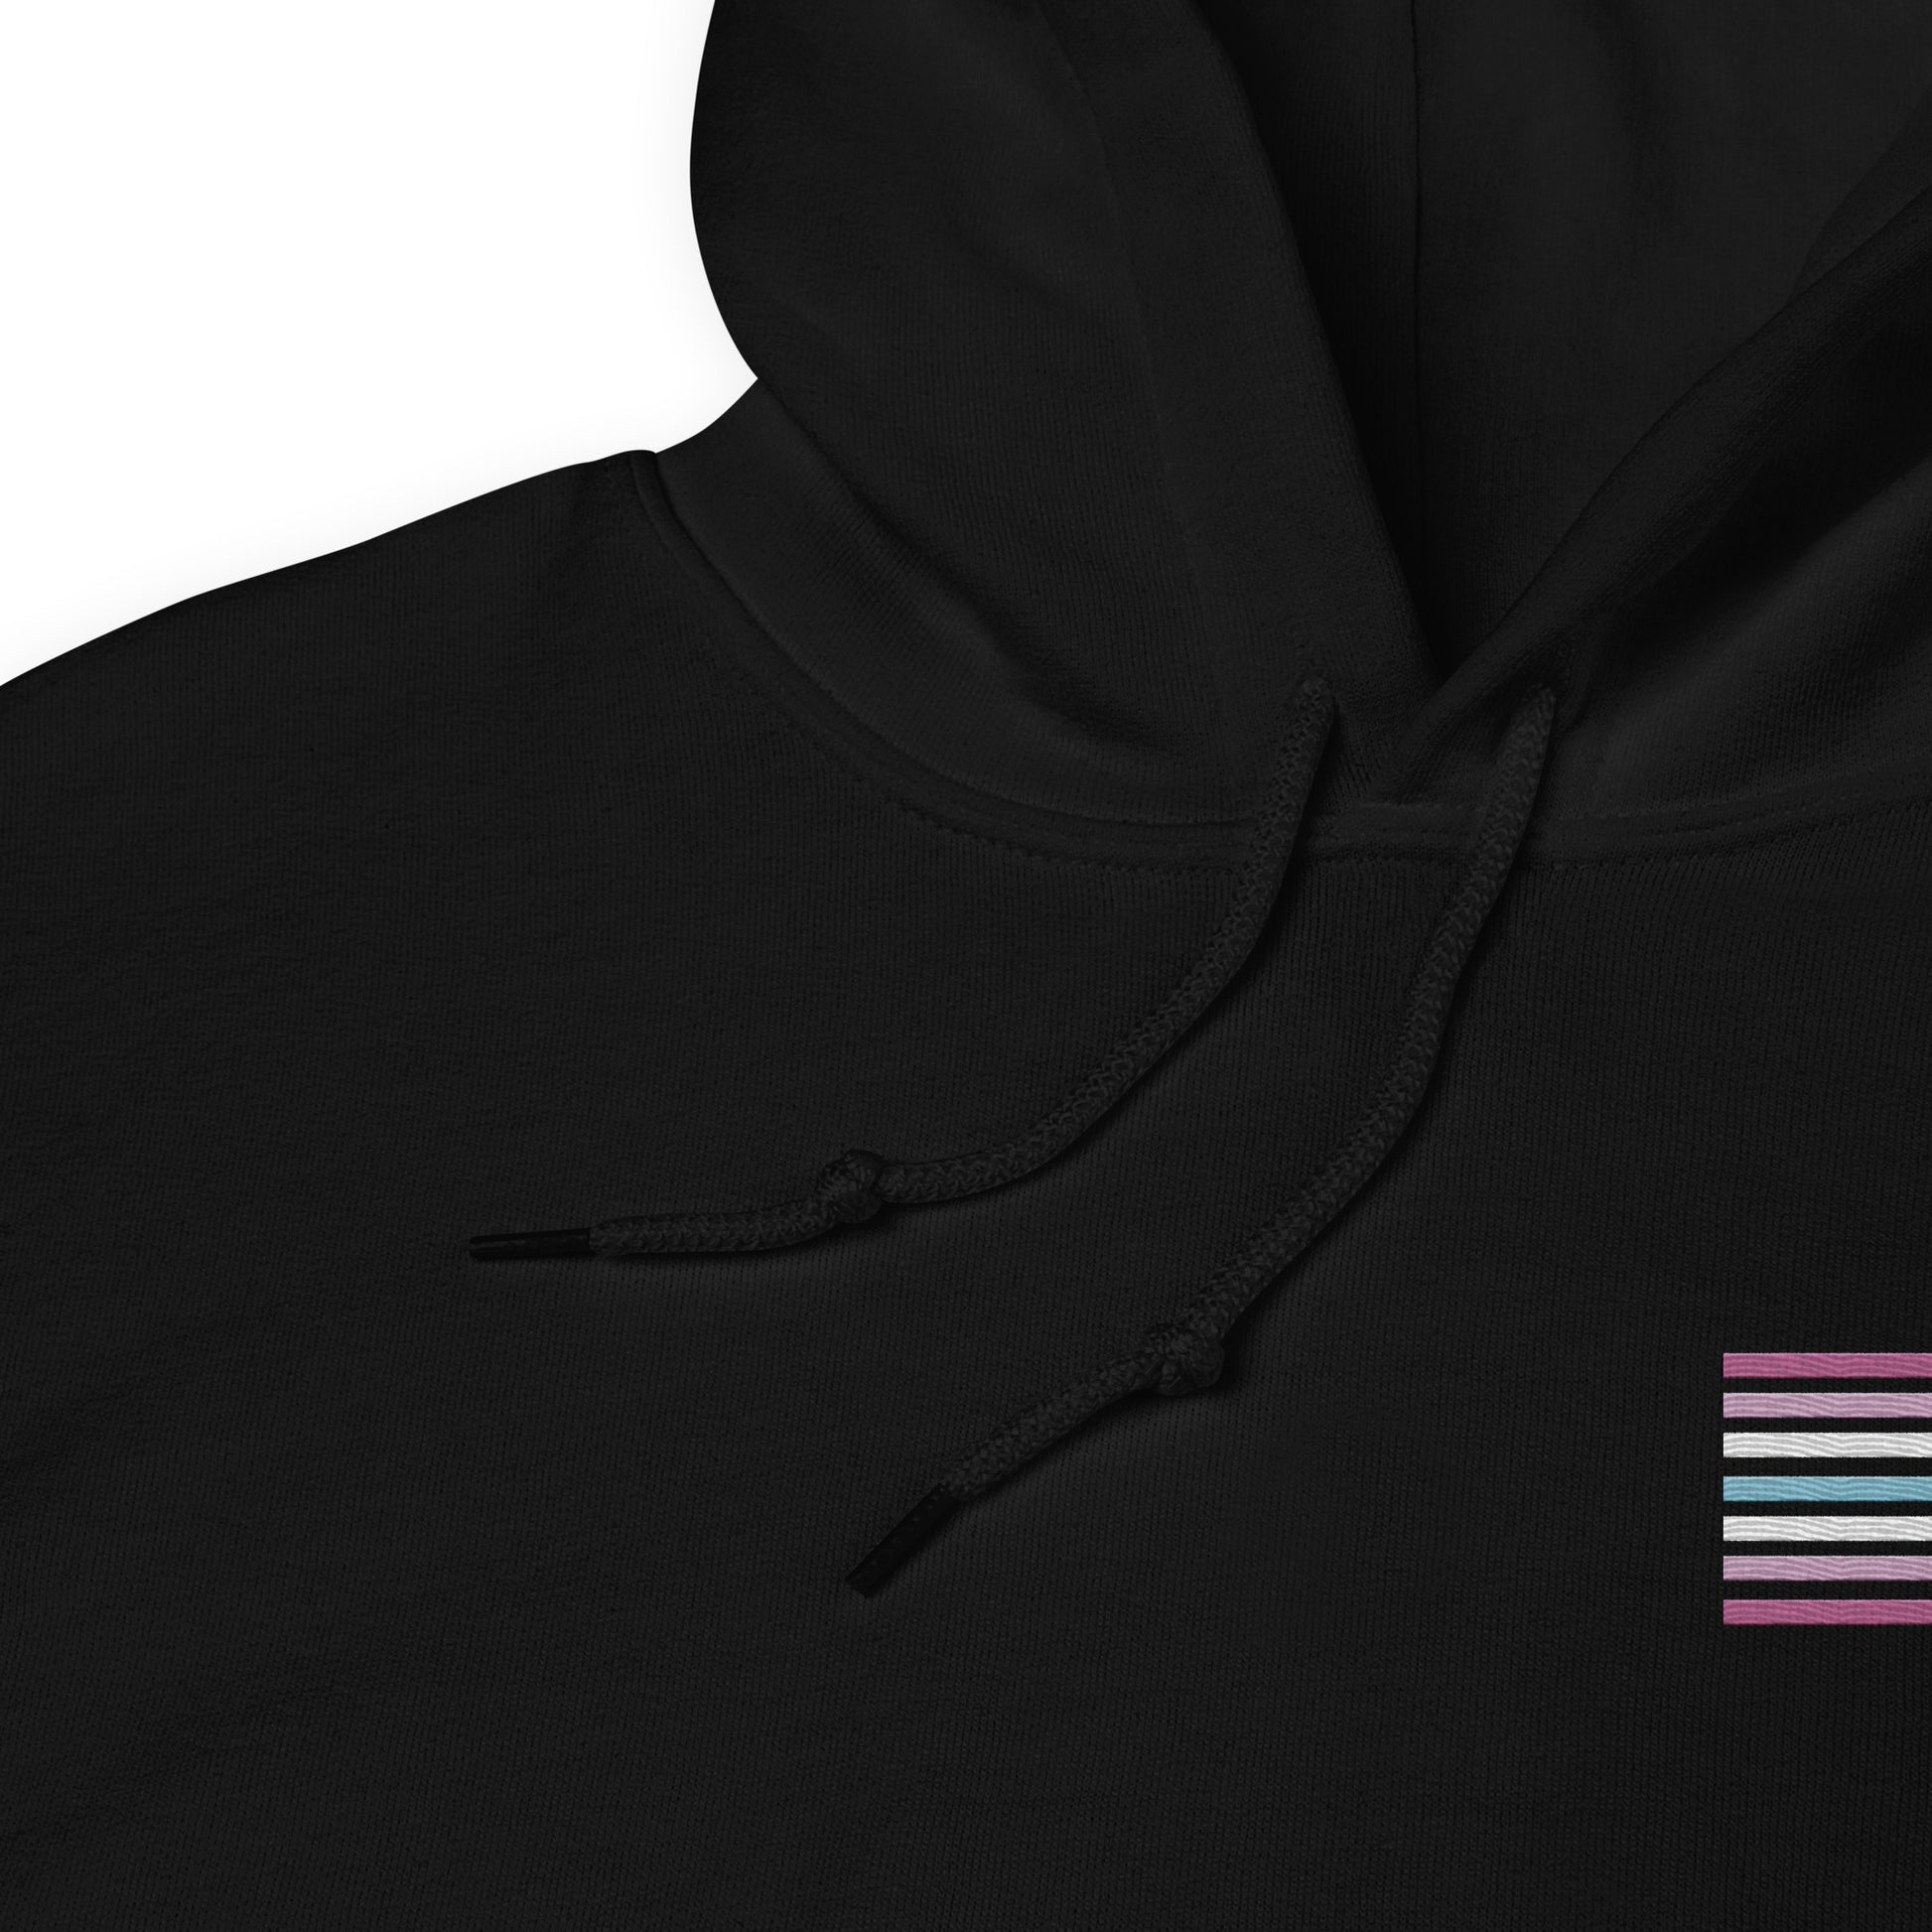 femboy hoodie, subtle femboi pride flag embroidered pocket design hooded sweatshirt, strings